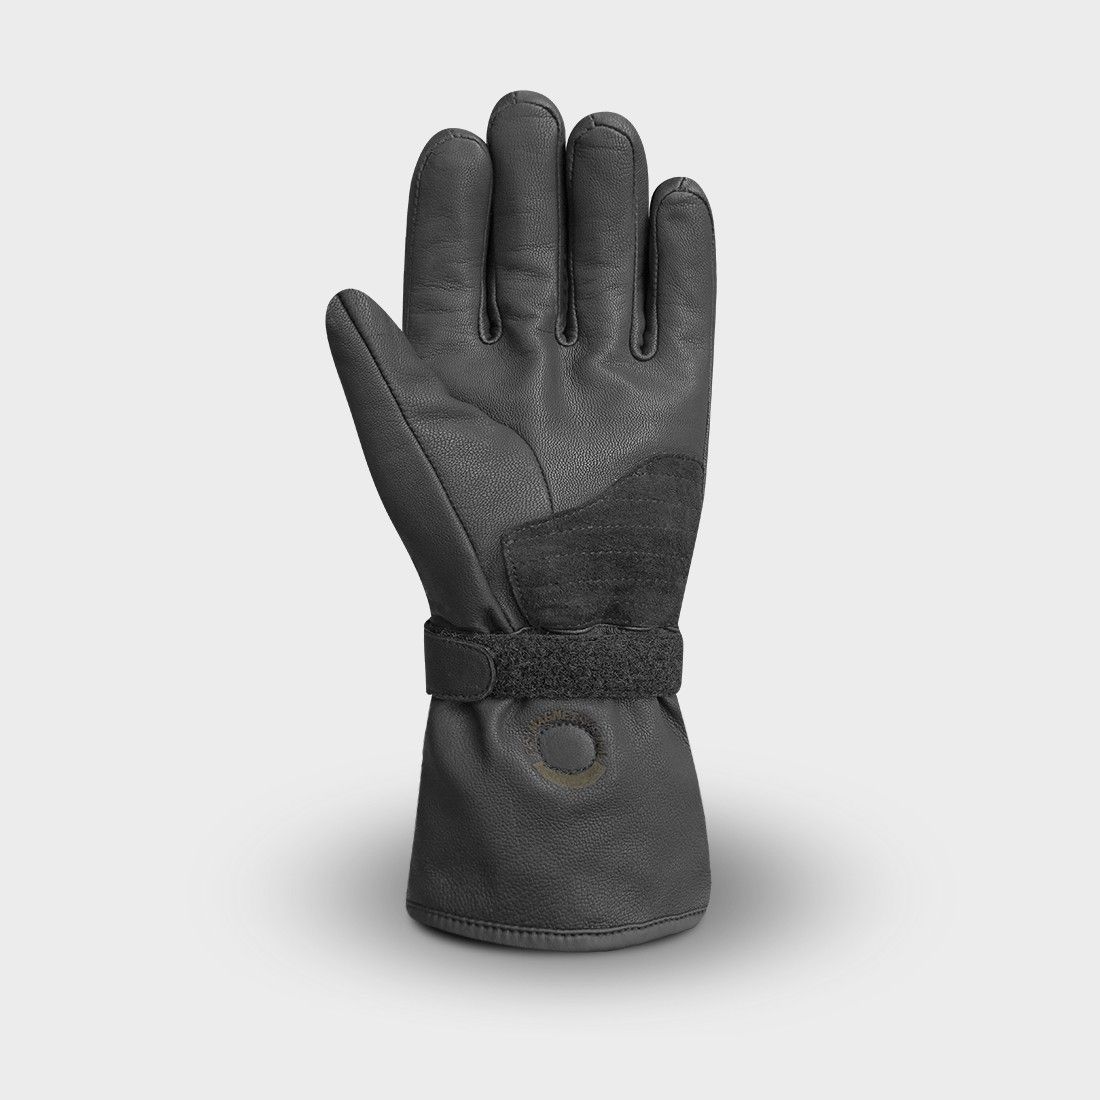 FLYNN 2 - Motorcycle gloves